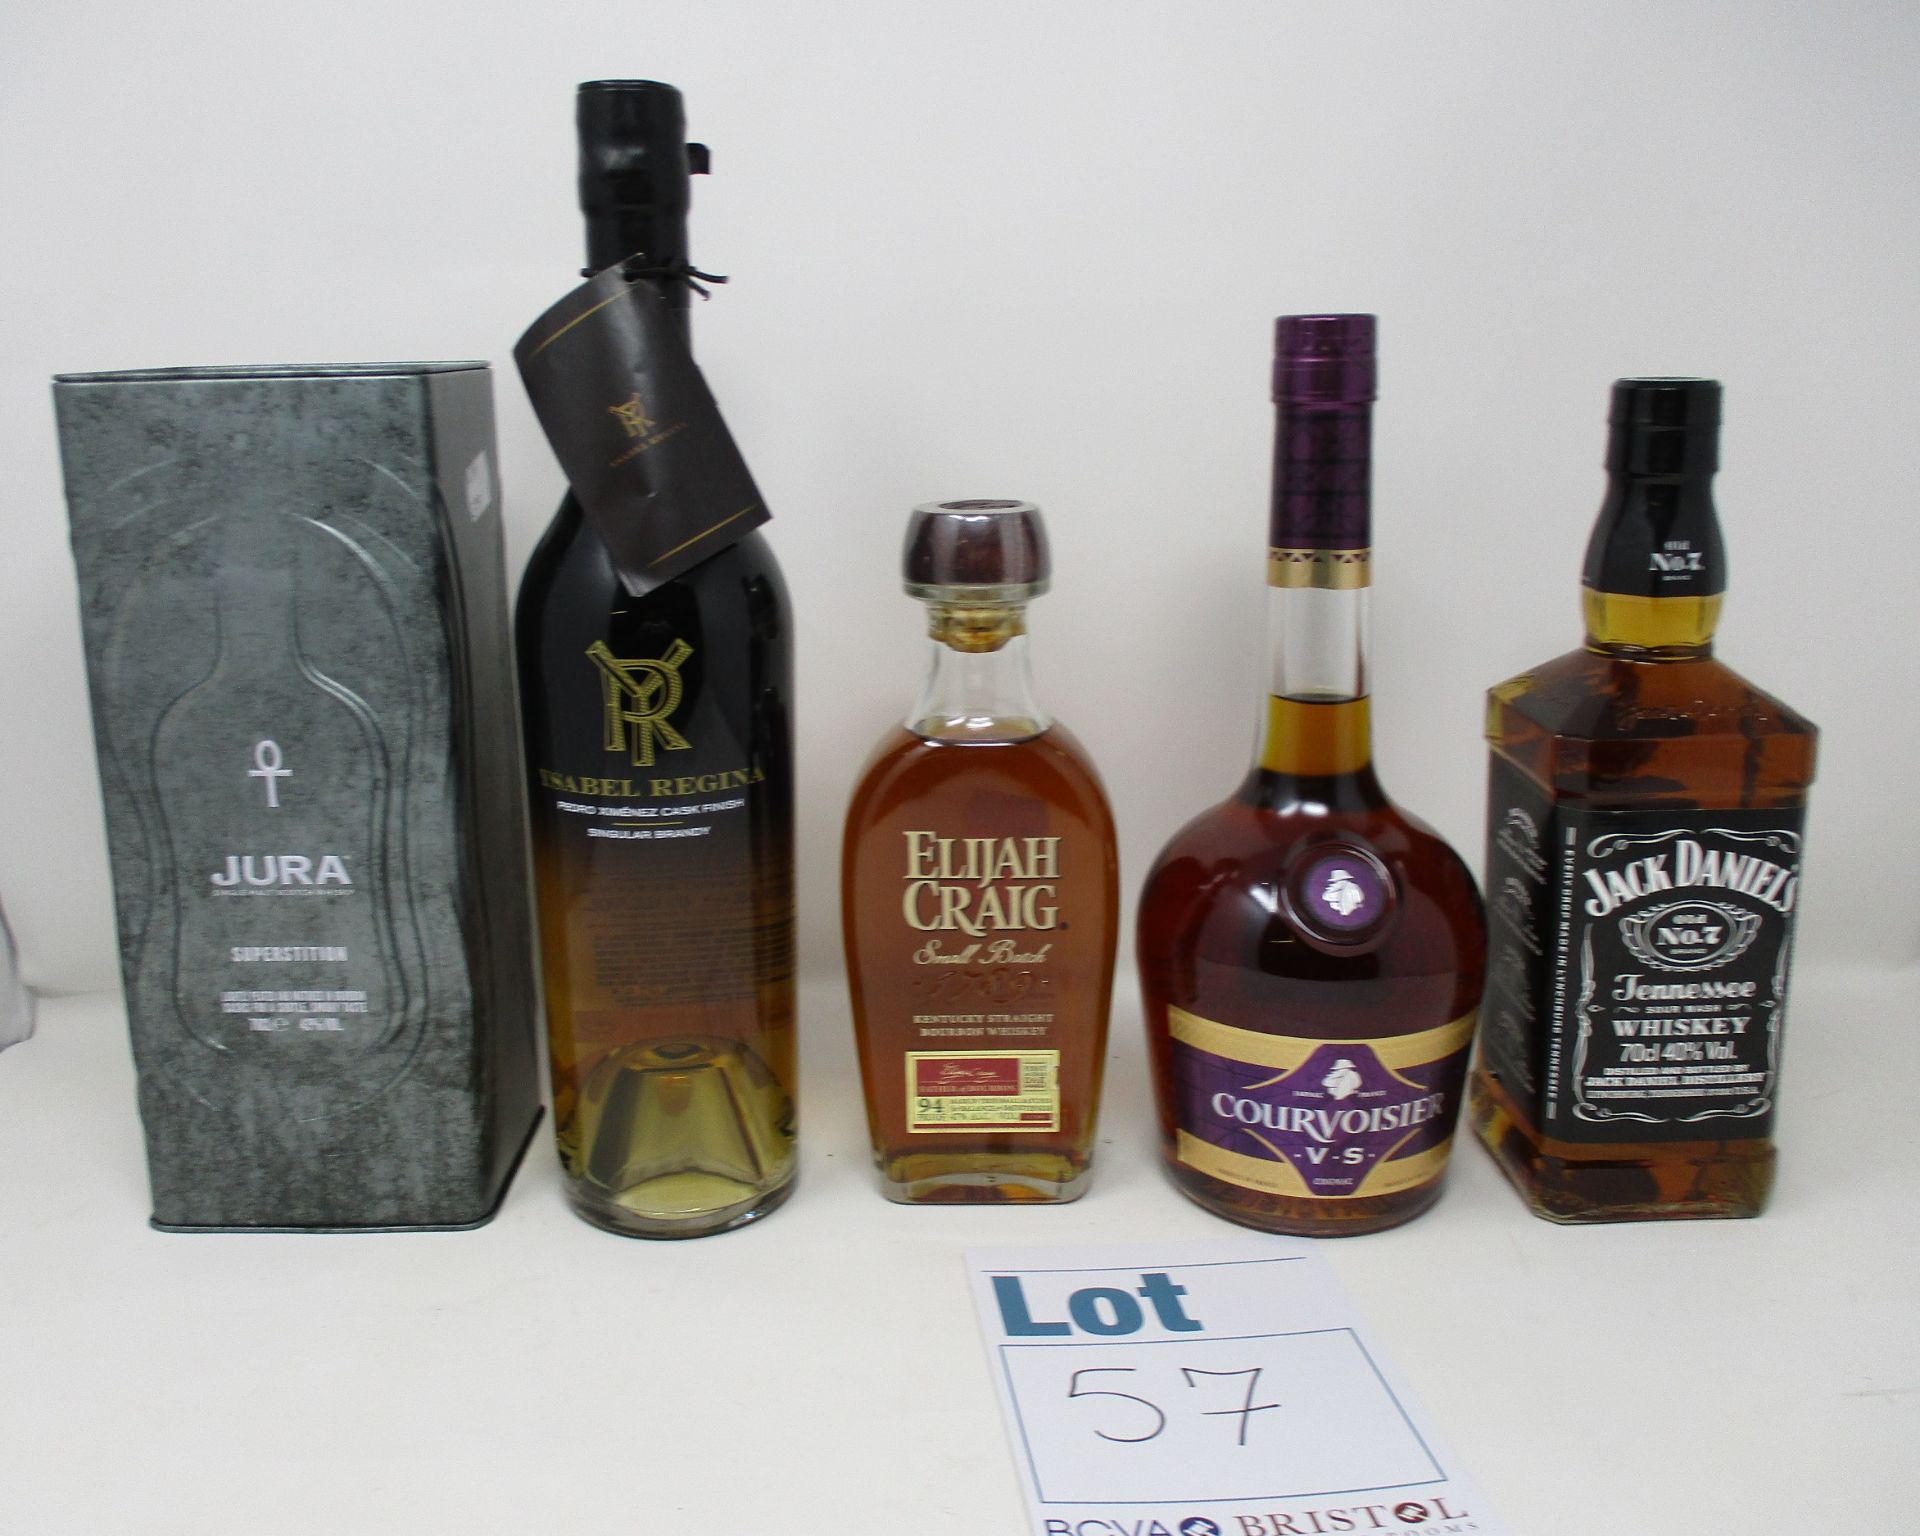 A Ysabel Regina Pedro Ximenez Cask Finish Singular Brandy, a Courvoisier VS Cognac (70cl), a Jura